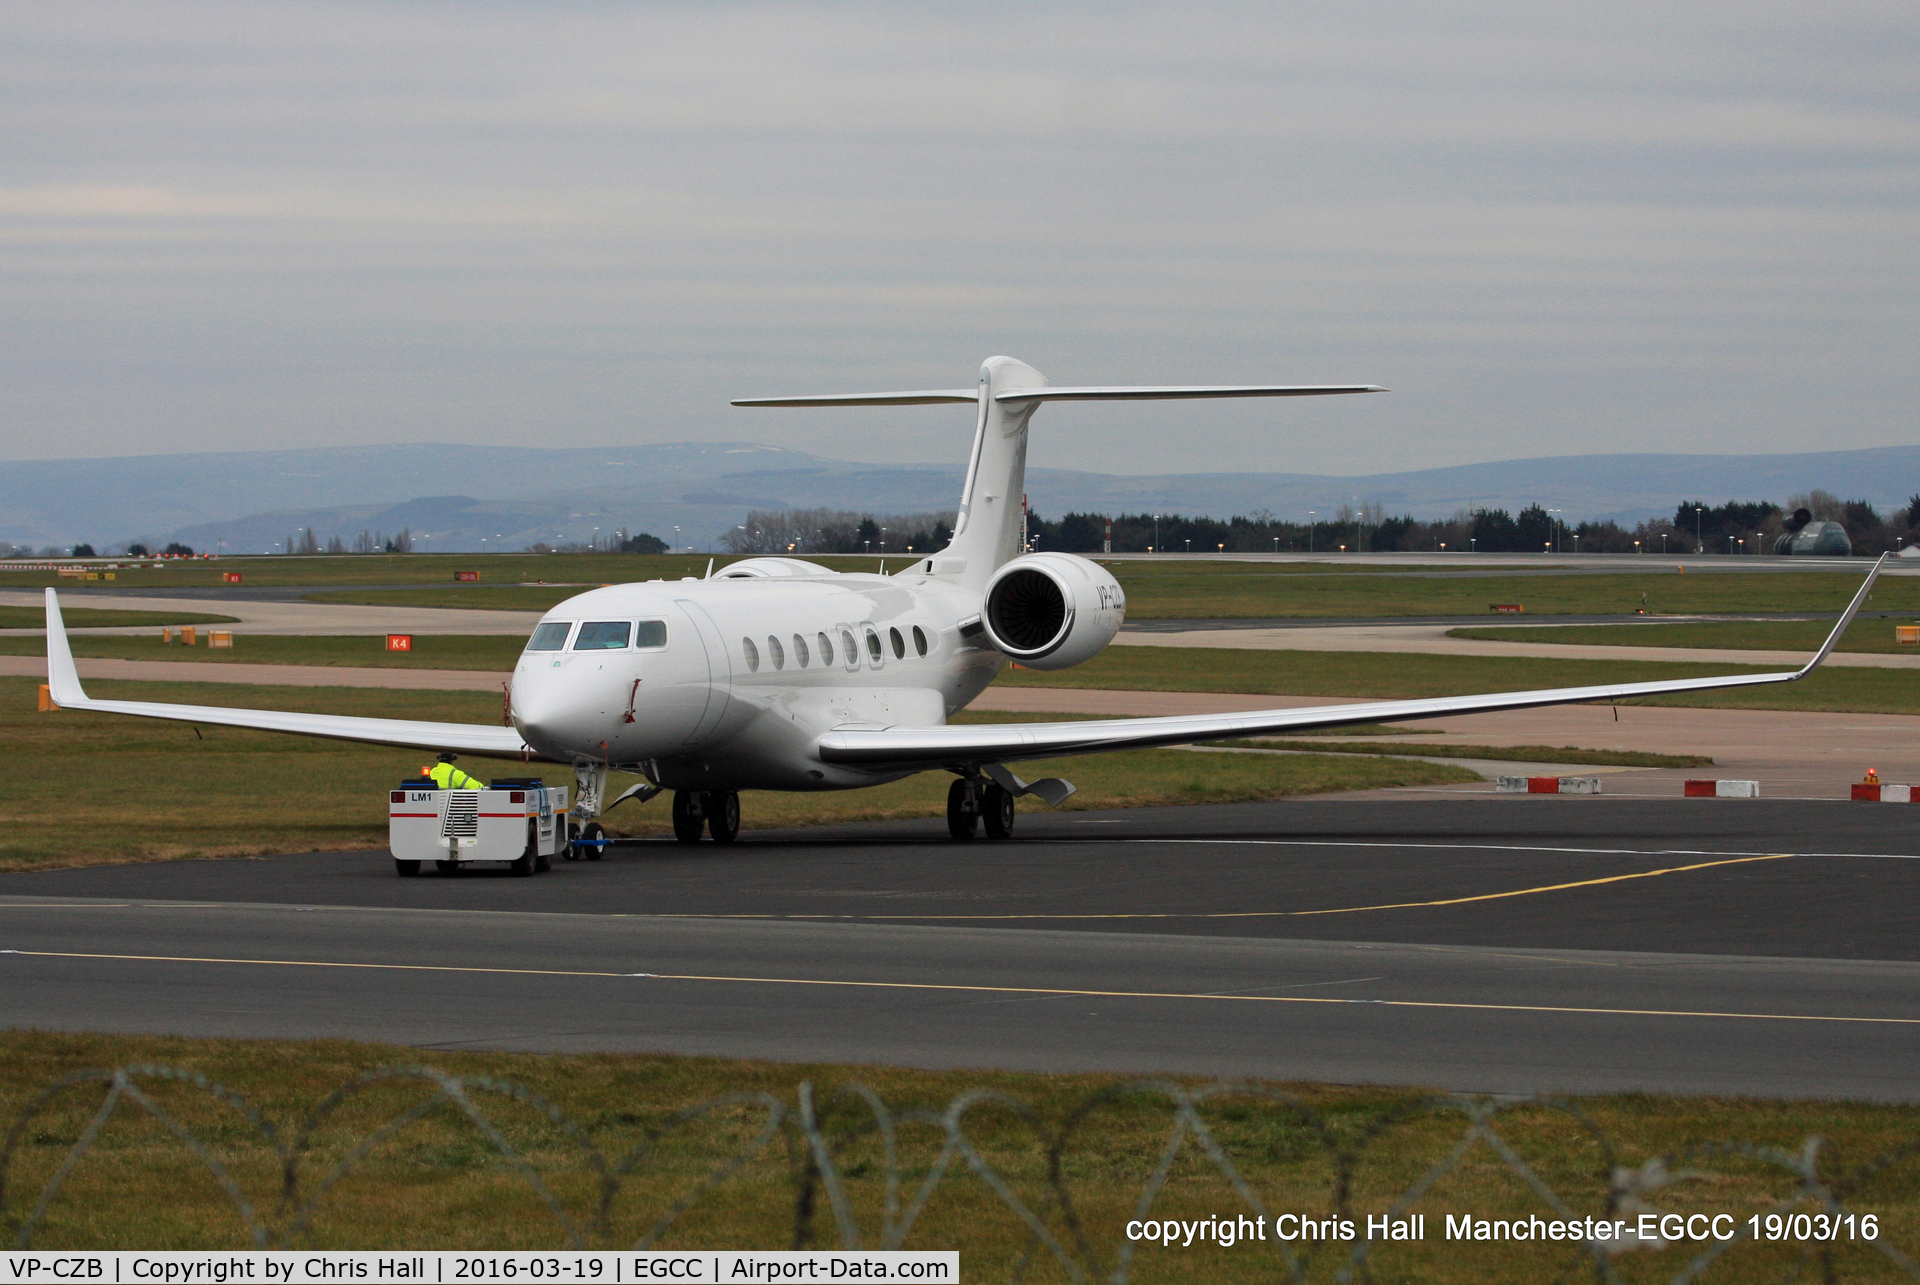 VP-CZB, 2015 Gulfstream Aerospace G650 (G-VI) C/N 6129, at Manchester Airport